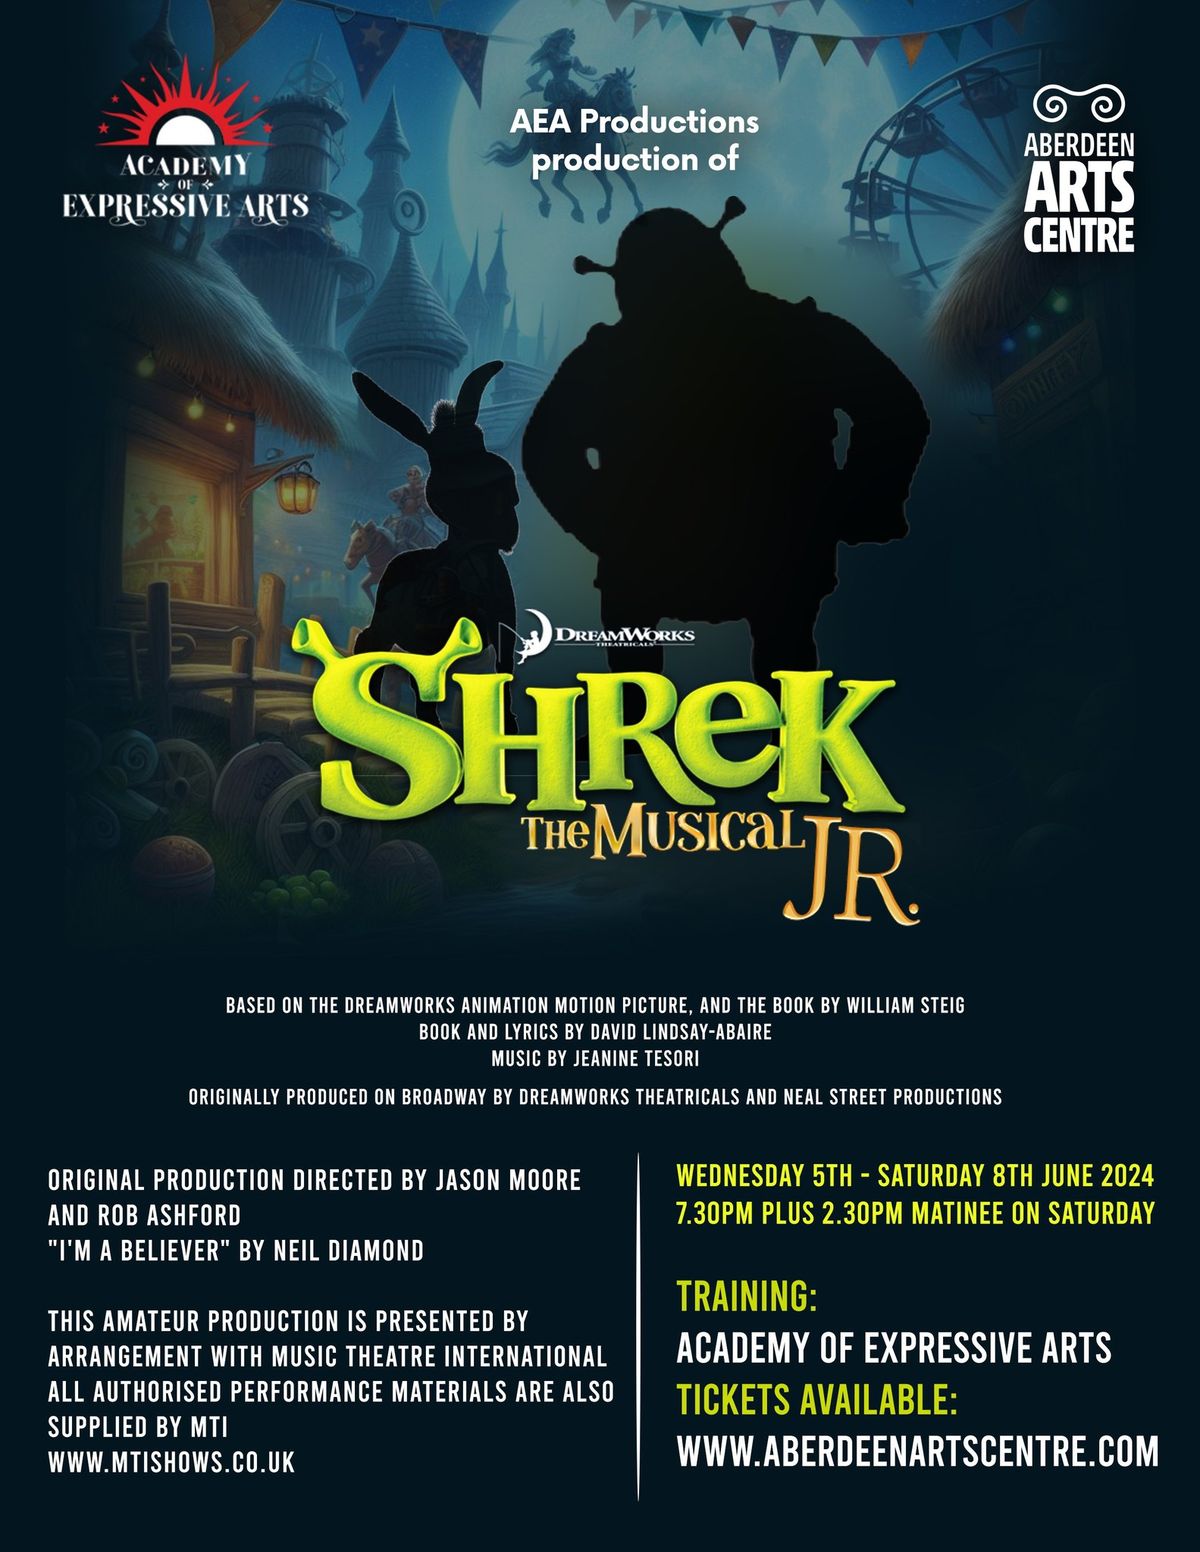 AEA Productions present "Shrek Jr"